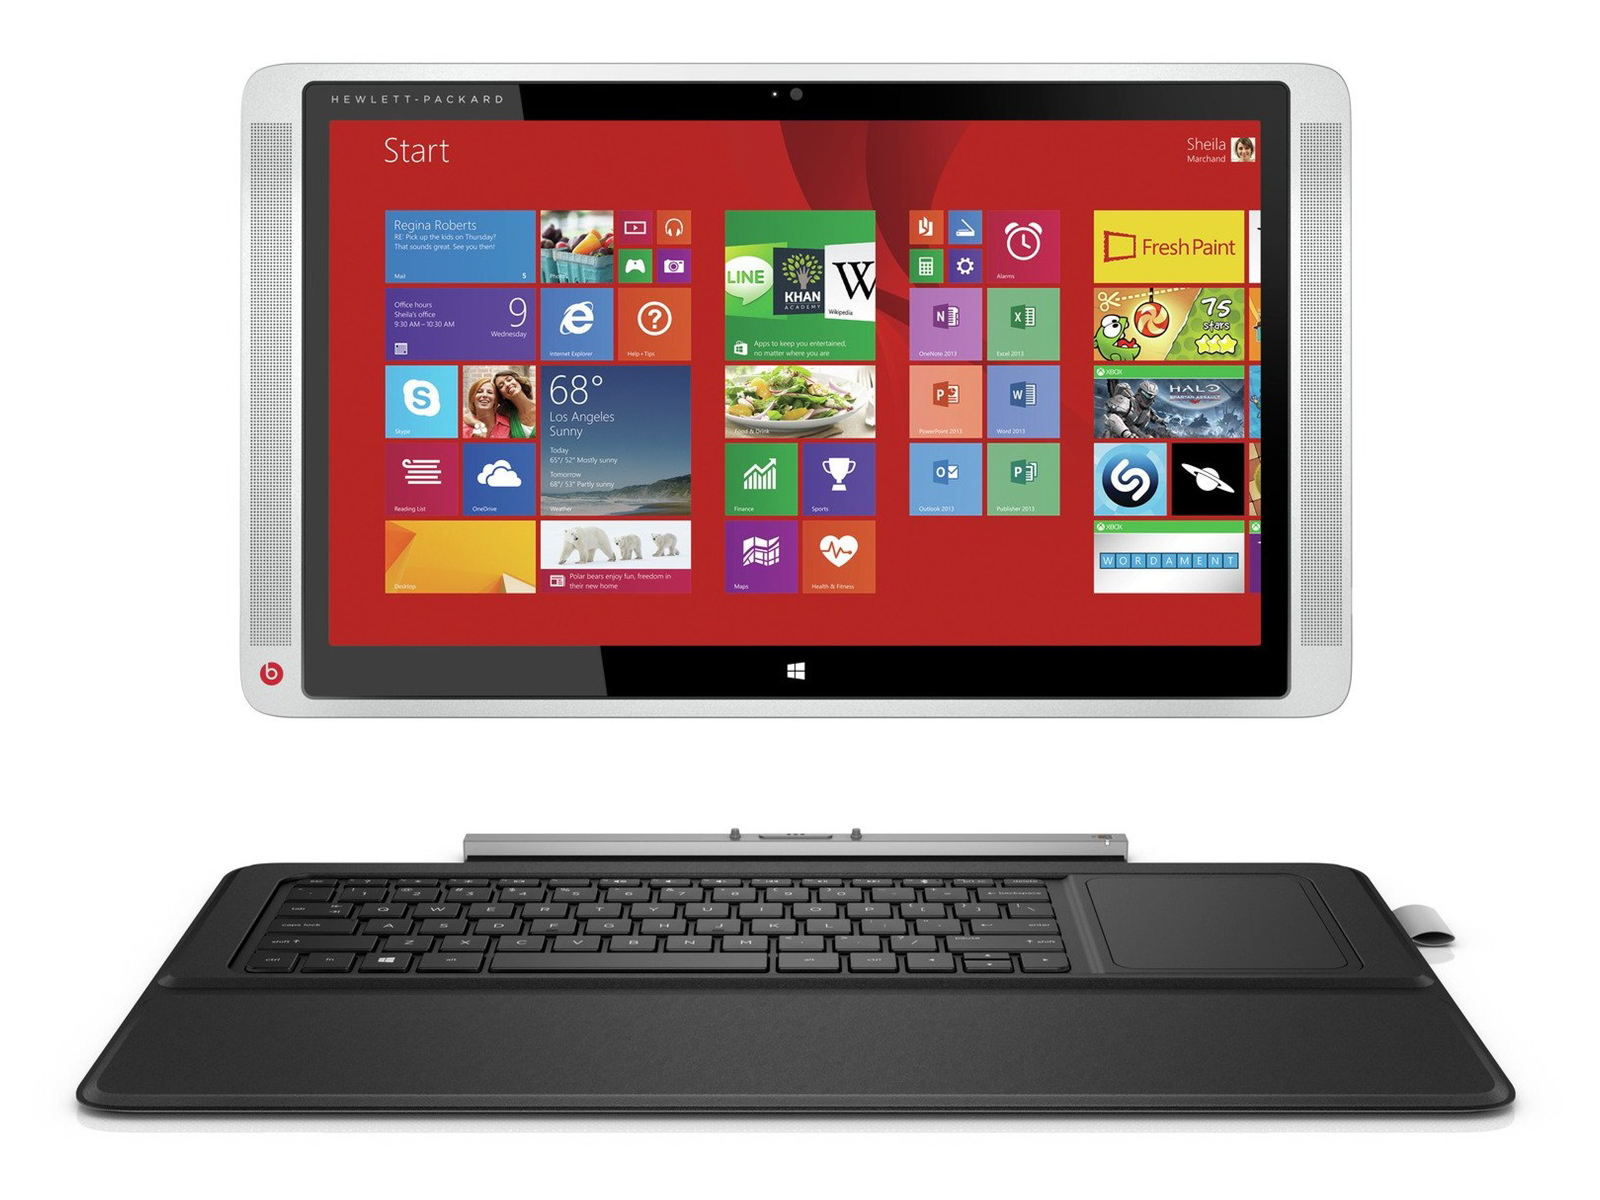 HP Envy x2 review: Half-tablet, half-laptop, all Atom - CNET